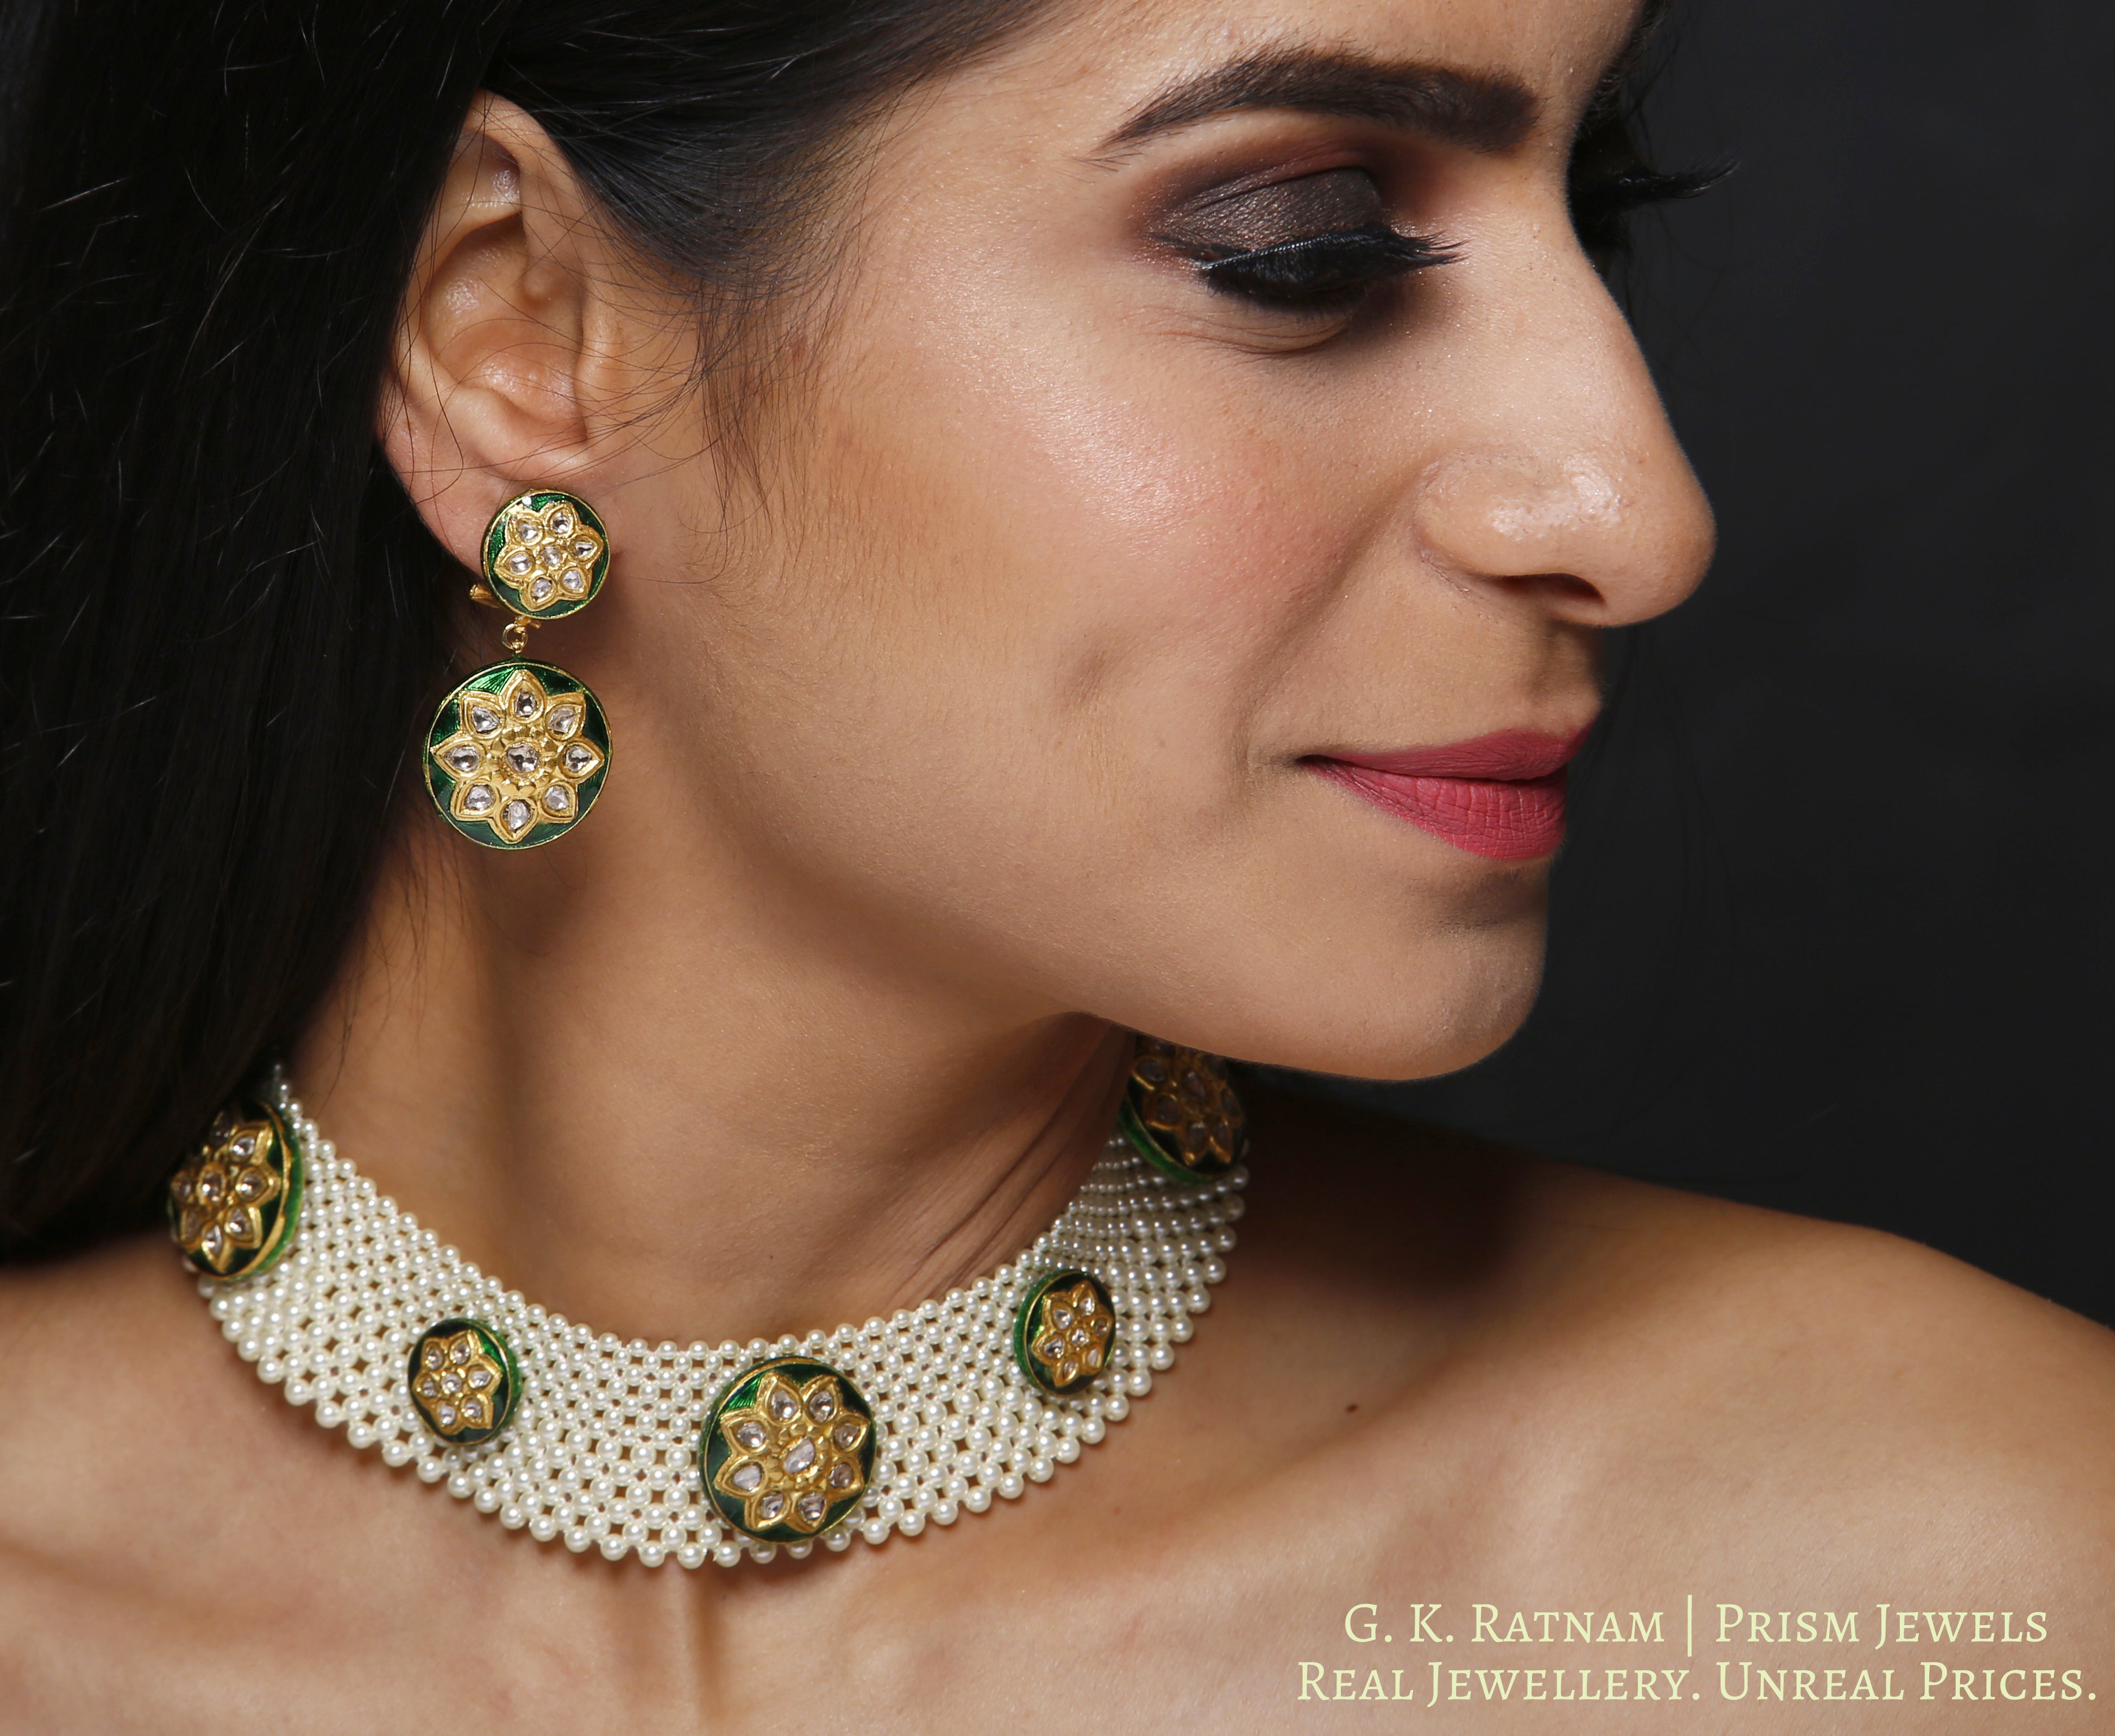 23k Gold and Diamond Polki Necklace Set with green enamelled rounds crocheted in lustrous pearls - gold diamond polki kundan meena jadau jewellery